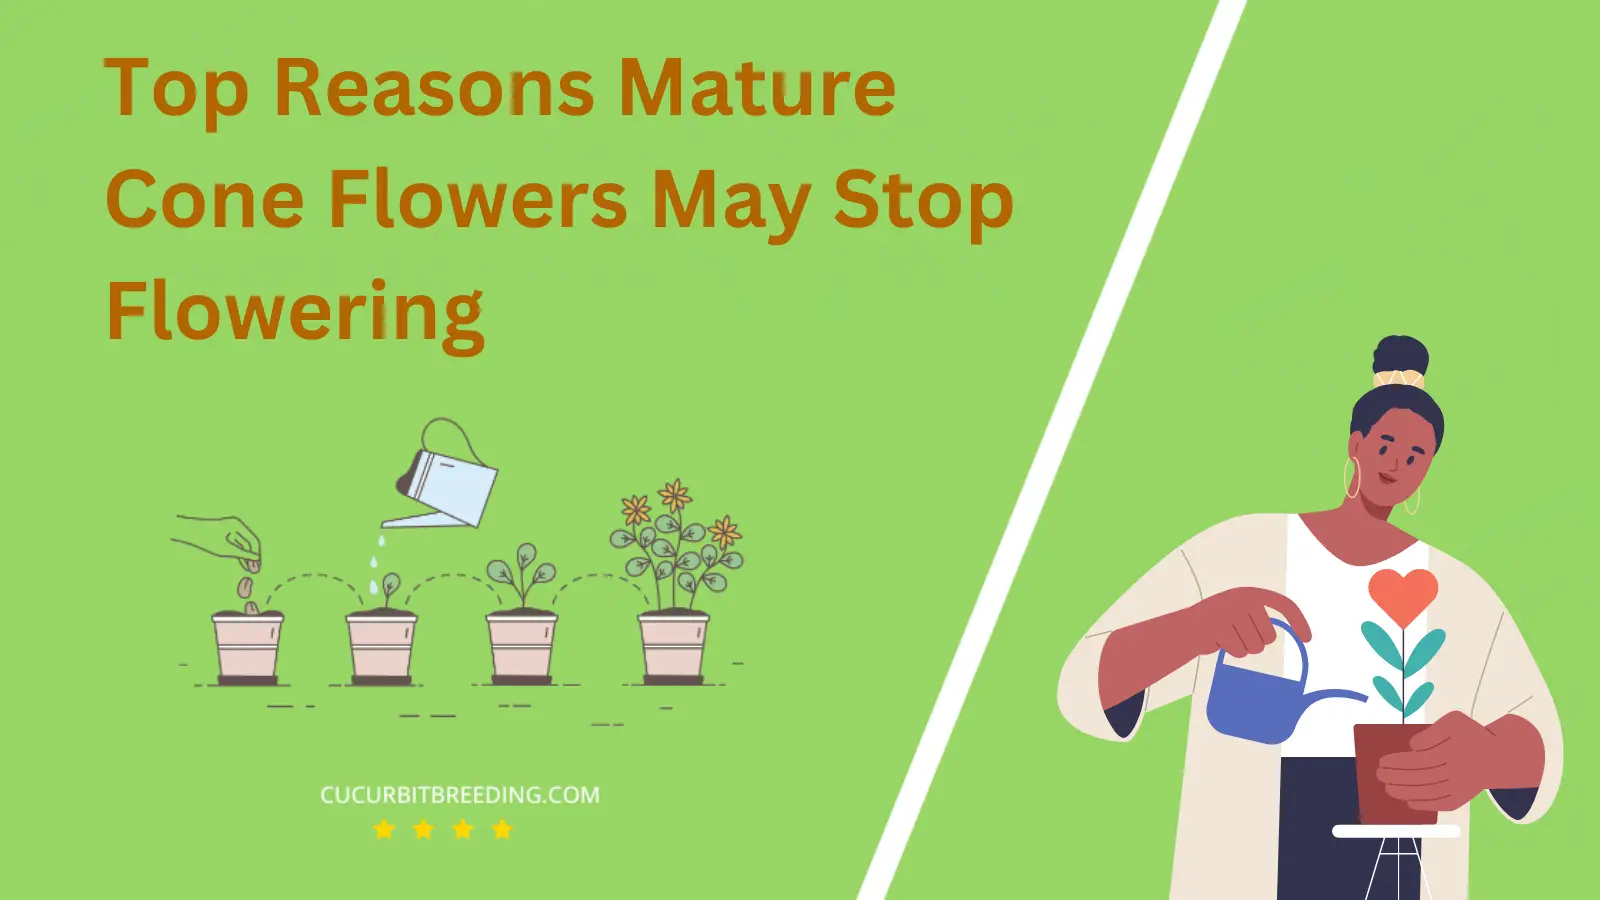 Top Reasons Mature Cone Flowers May Stop Flowering